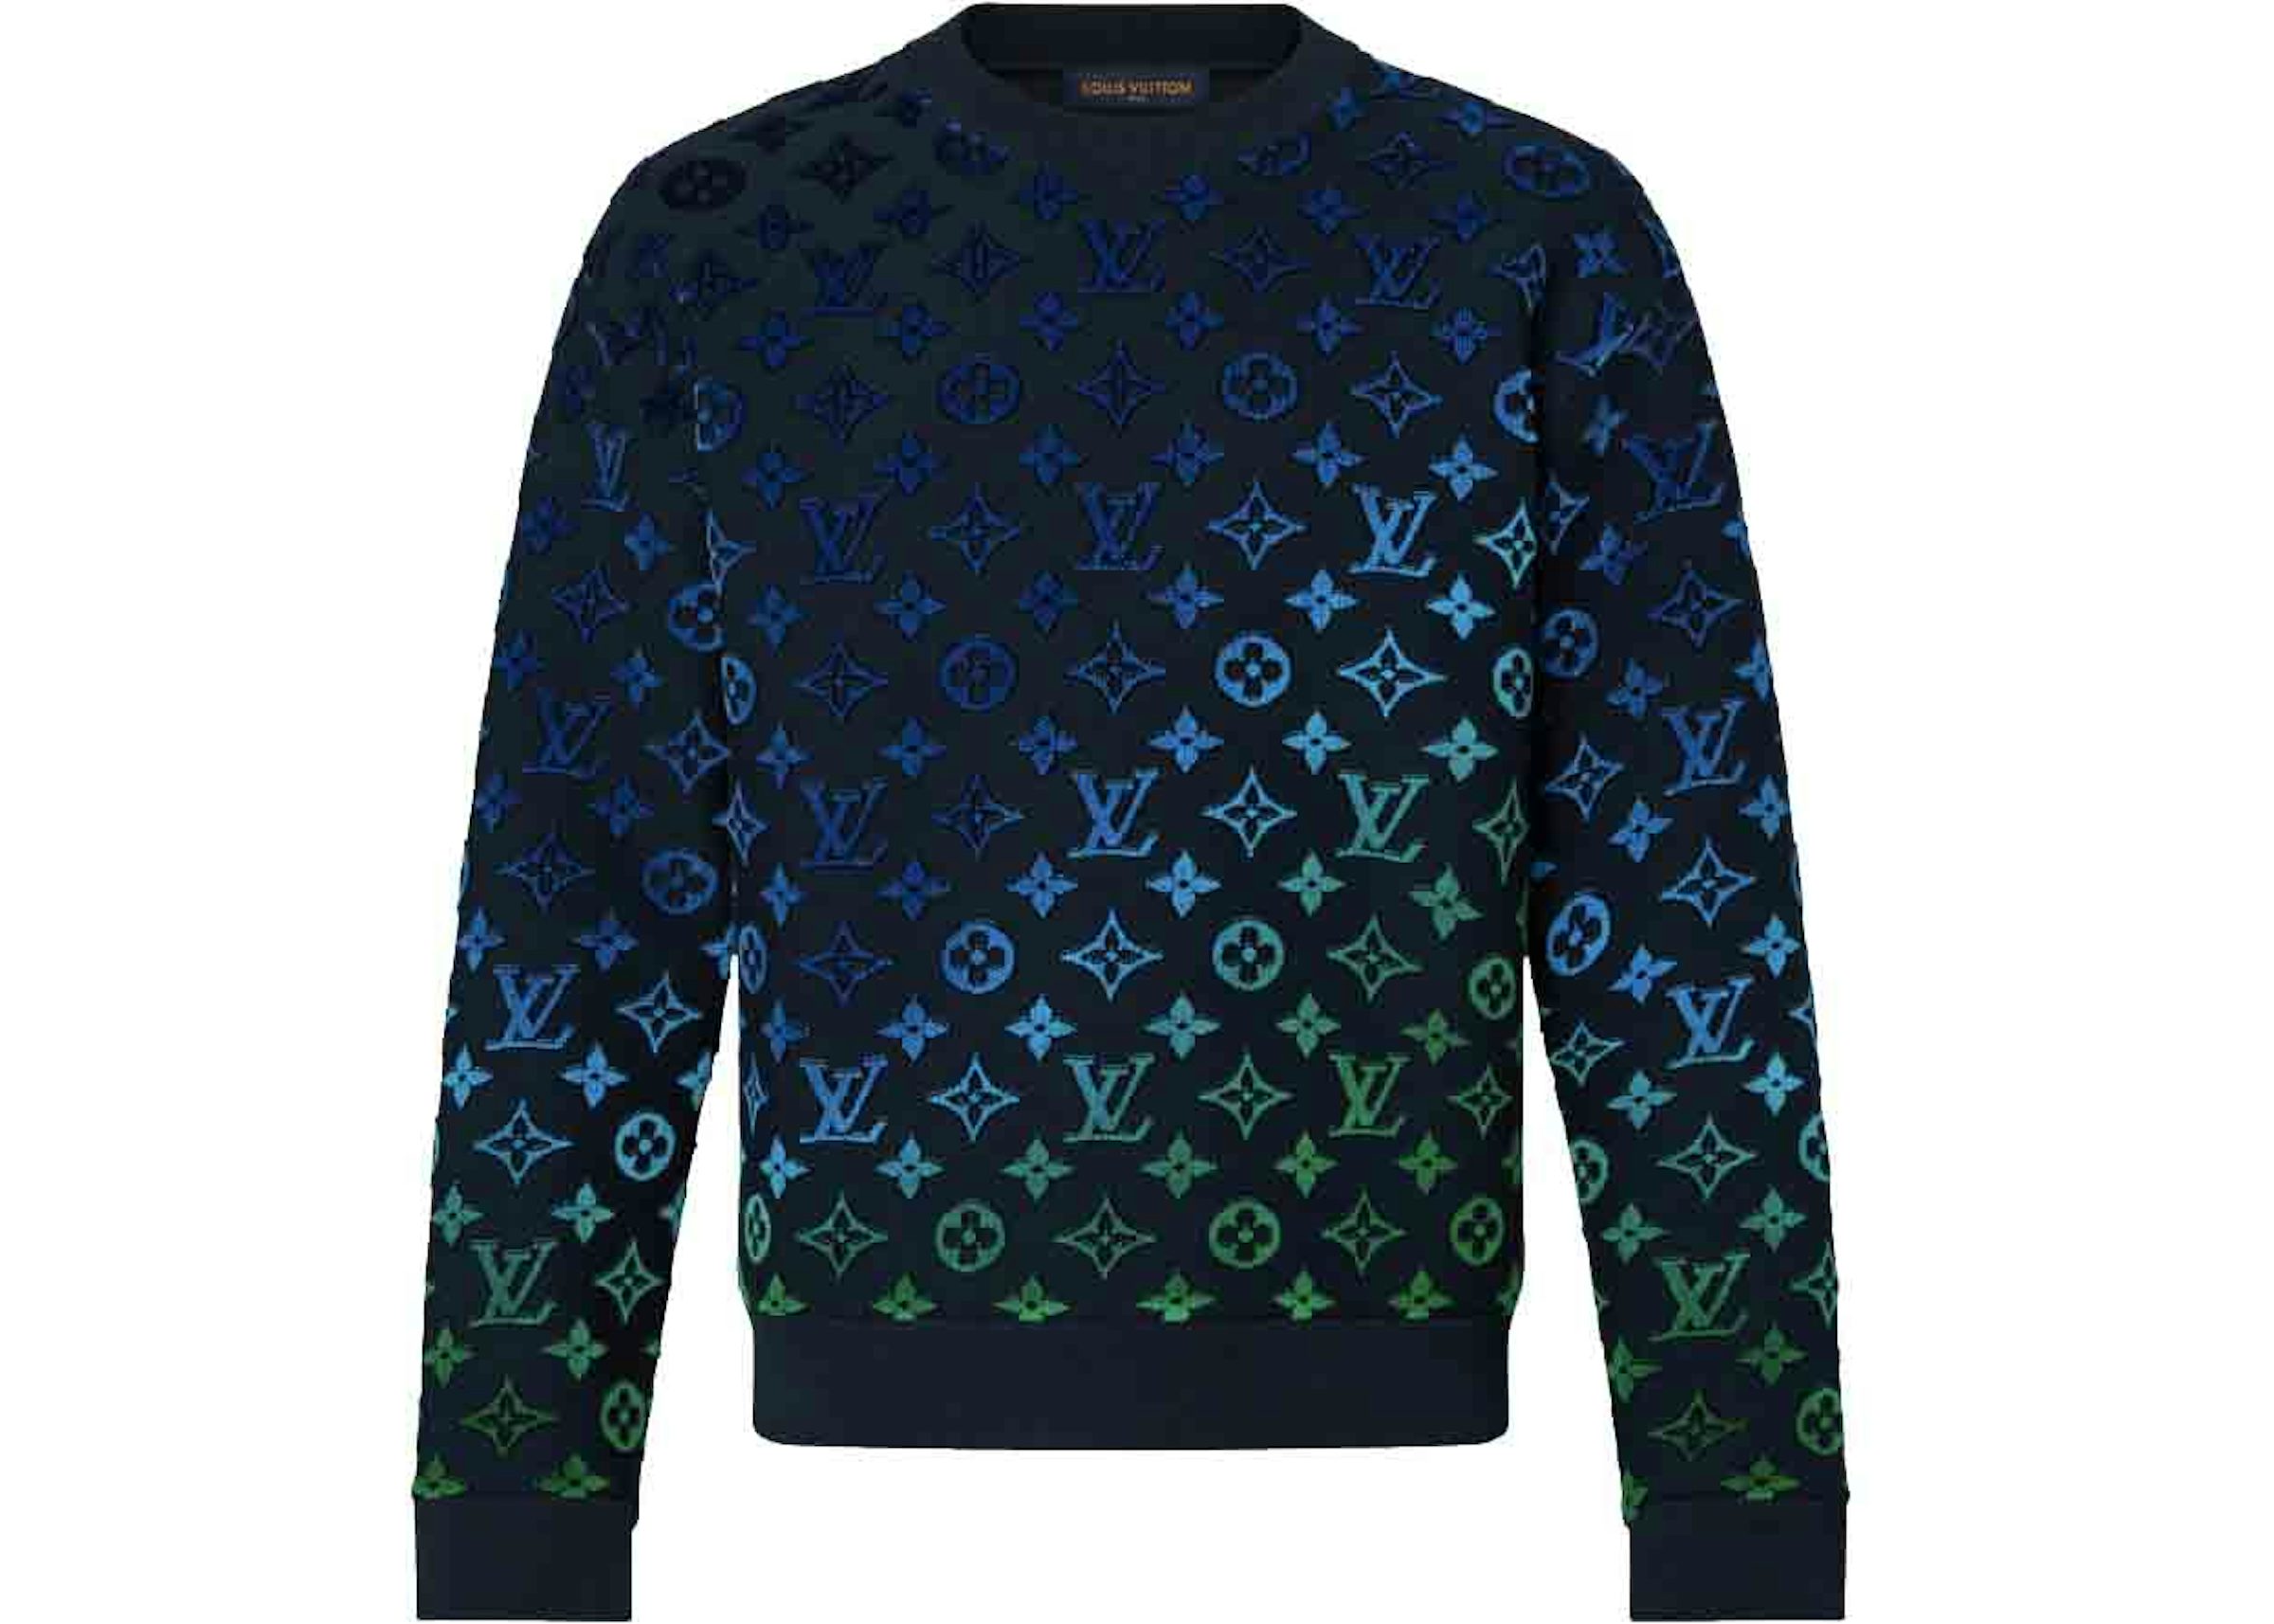 Louis Vuitton Monogram Sporty V-Neck T-Shirt